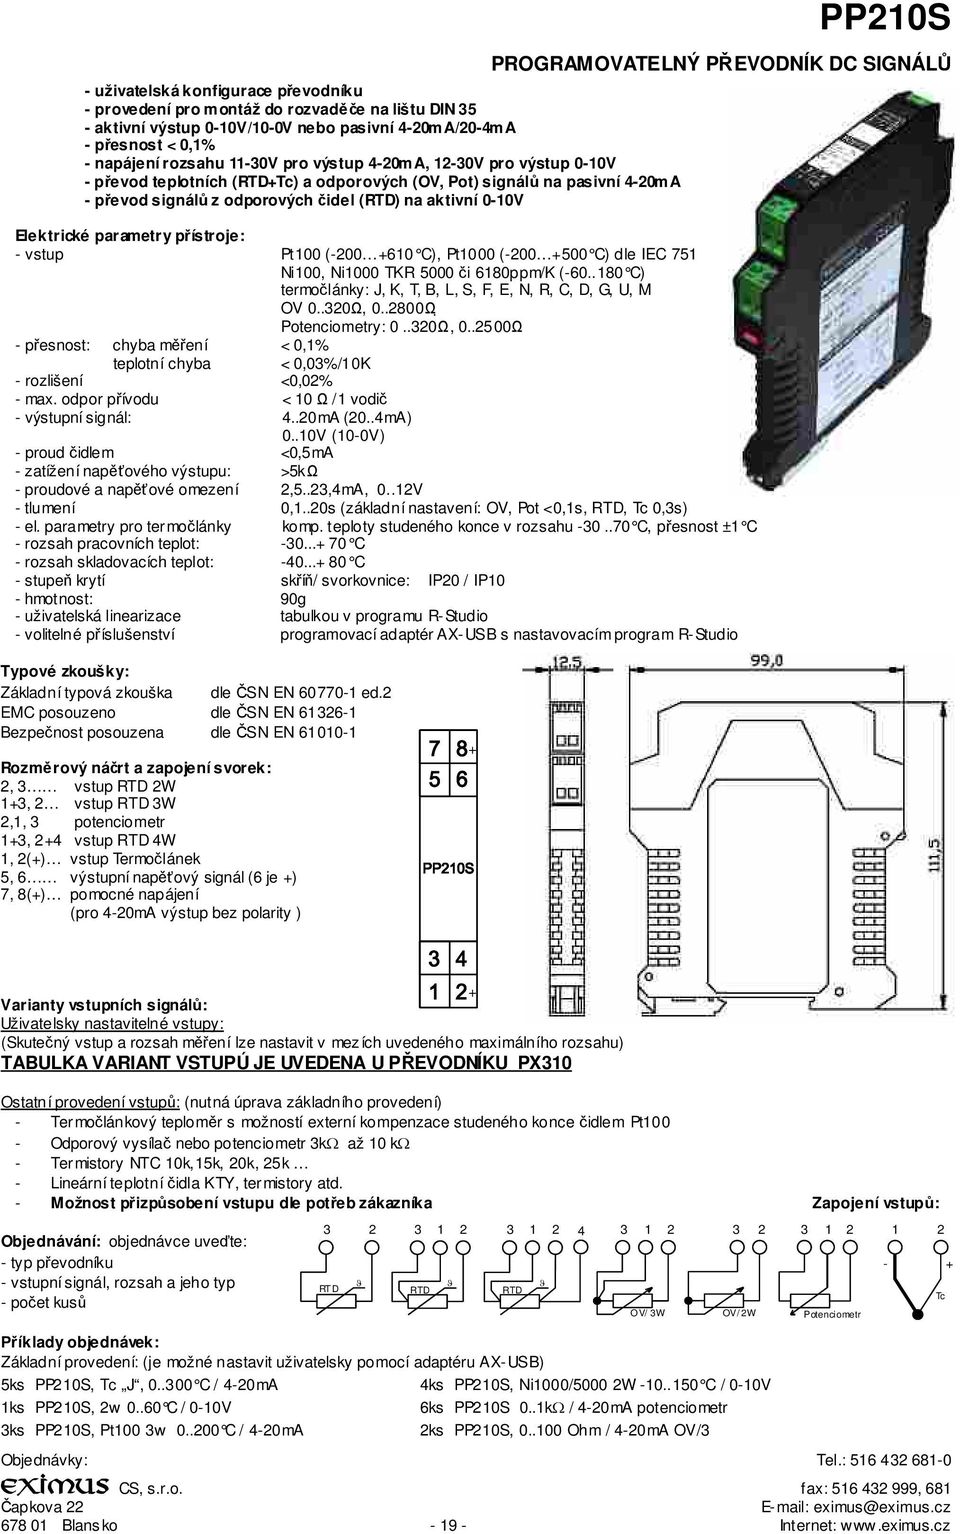 Elektrické parametry pístroje: - vstup Pt100 (-200 +610 C), Pt1000 (-200 +500 C) dle IEC 751 Ni100, Ni1000 TKR 5000 i 6180ppm/K (-60.